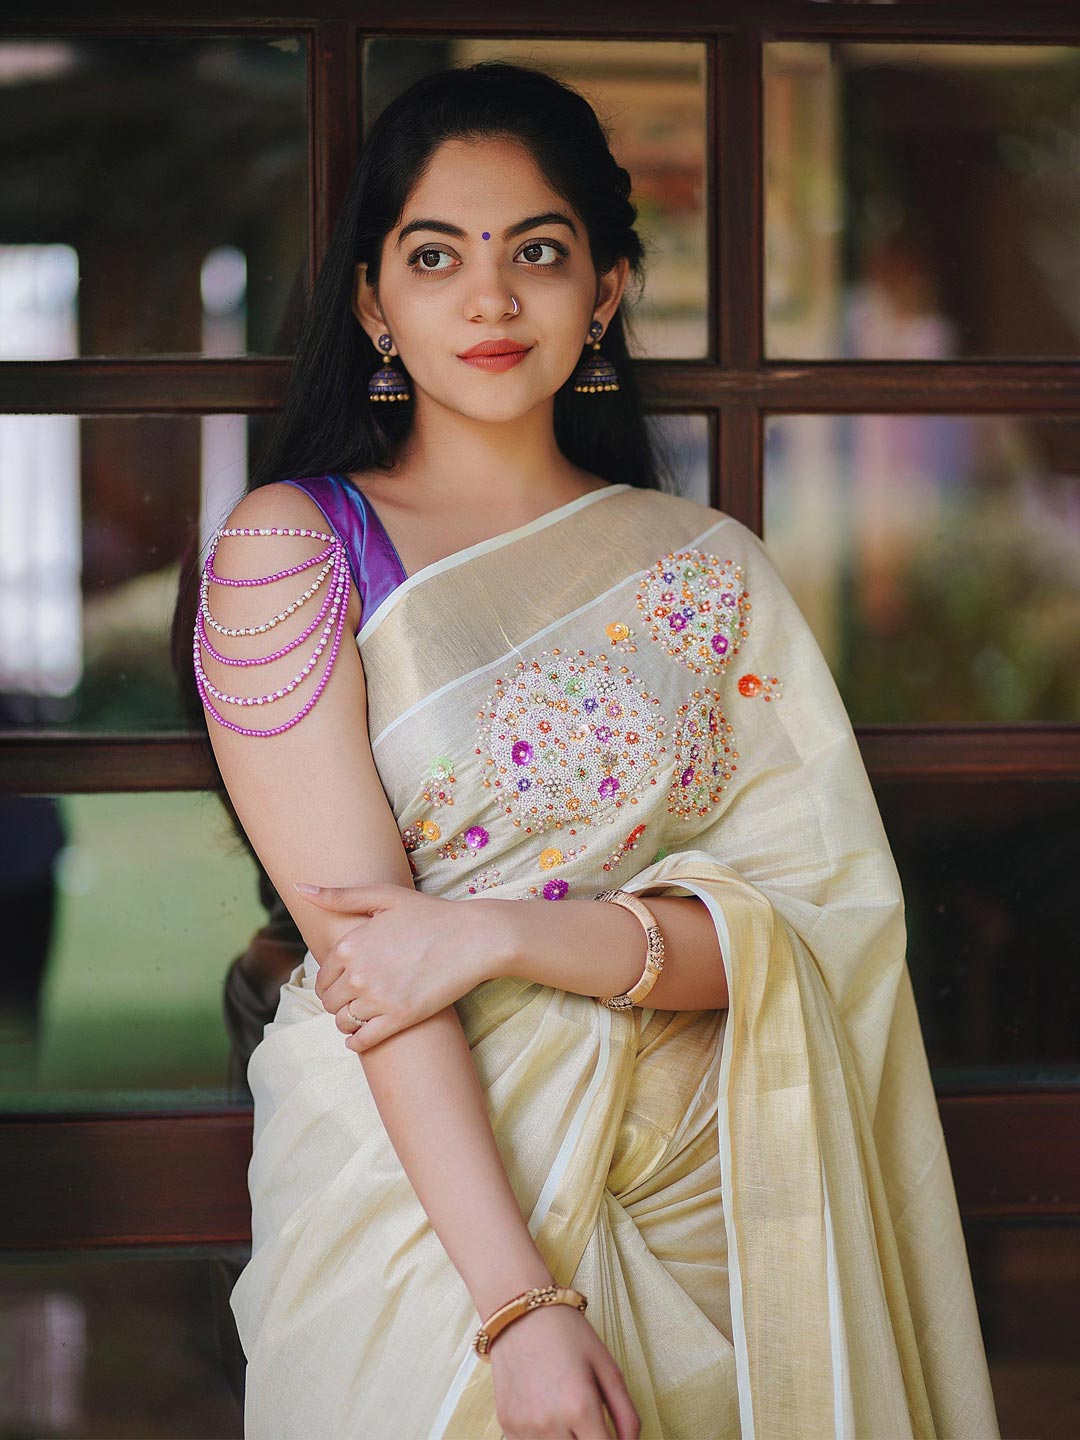 Mother Of Pearl Kerala Saree – Vedhika Fashion Studio